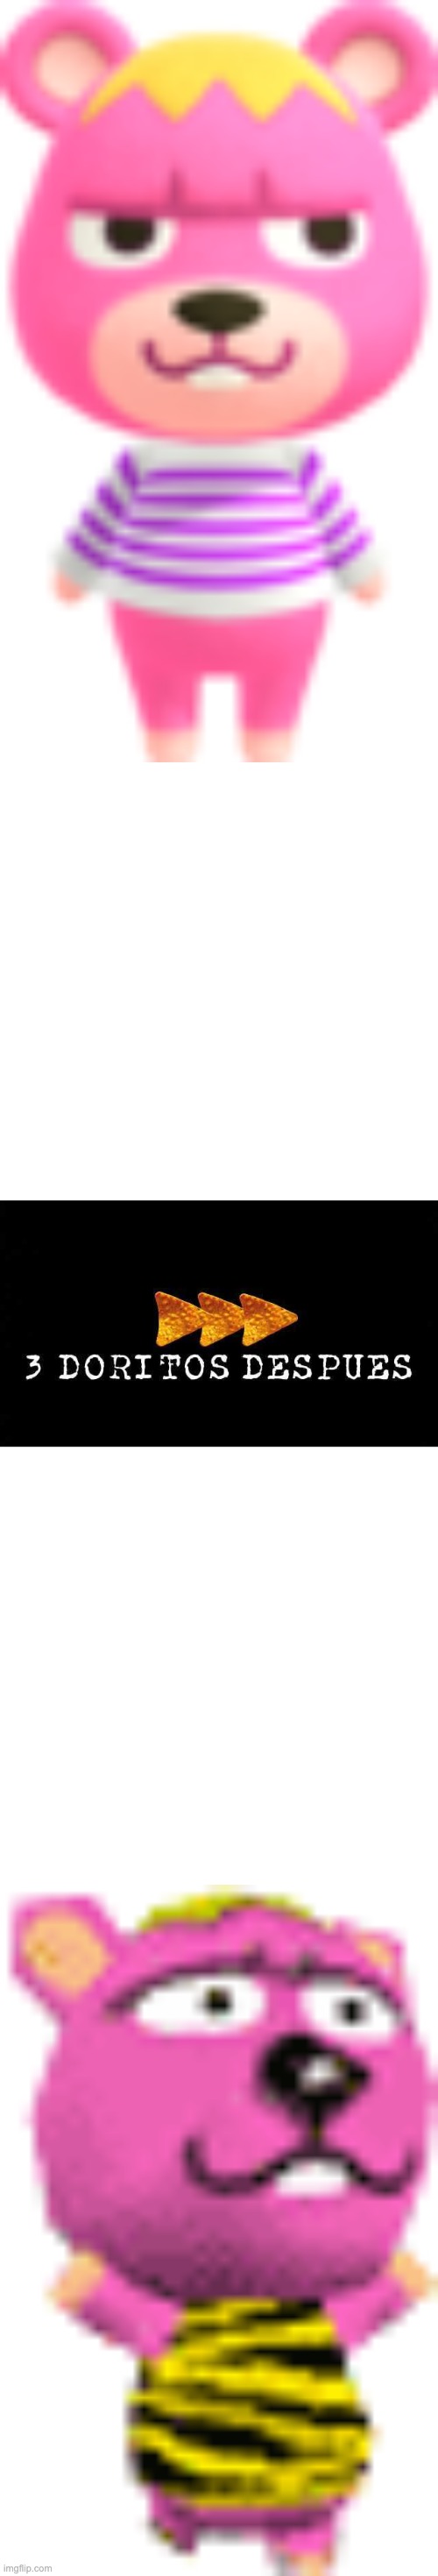 lol | image tagged in 3 doritos despu s,animal crossing | made w/ Imgflip meme maker